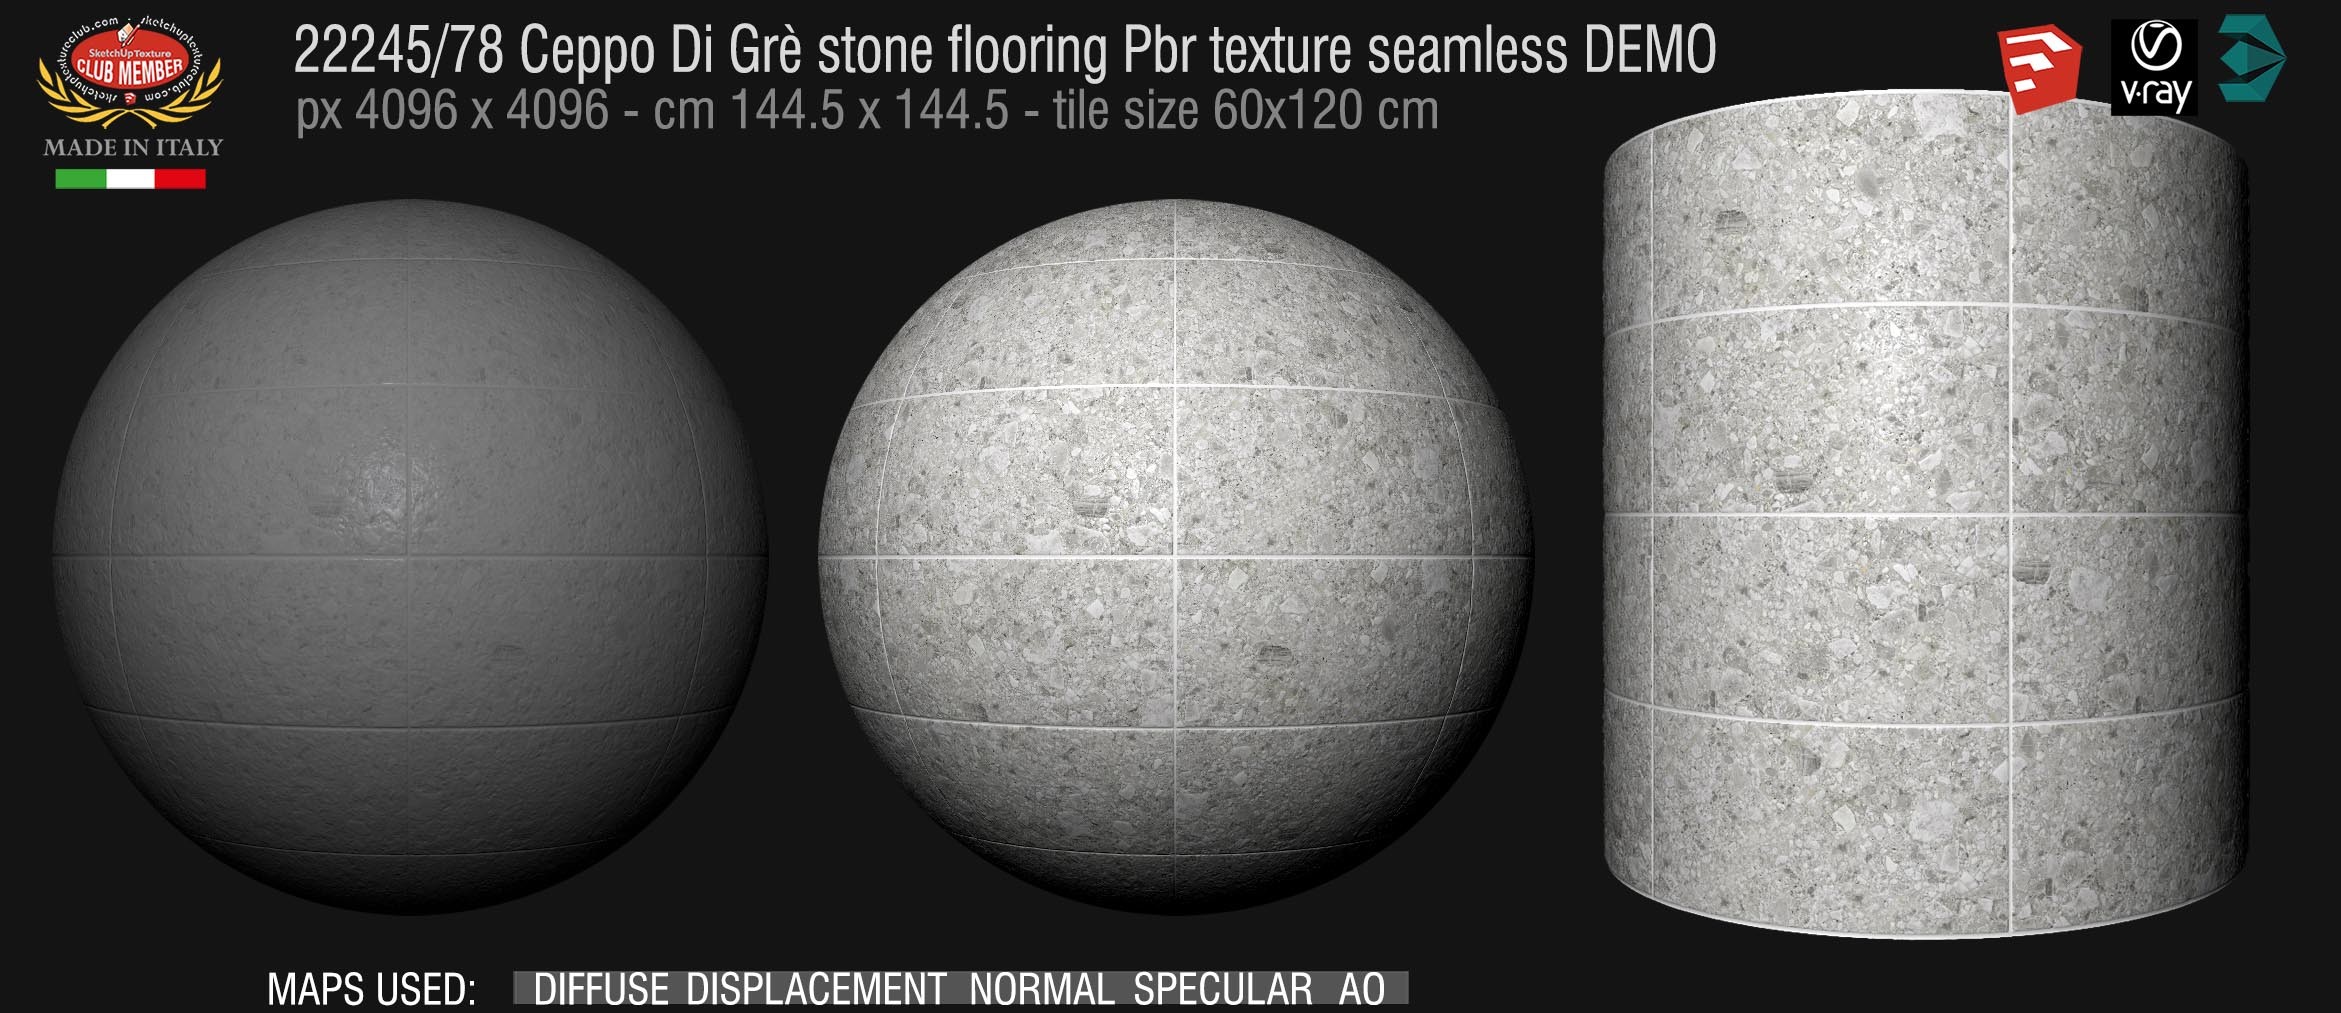 22245_78 Ceppo Di Grè stone flooring Pbr texture seamless DEMO - INTERIOR / OUTDOOR Paving - tile size 60x120 cm